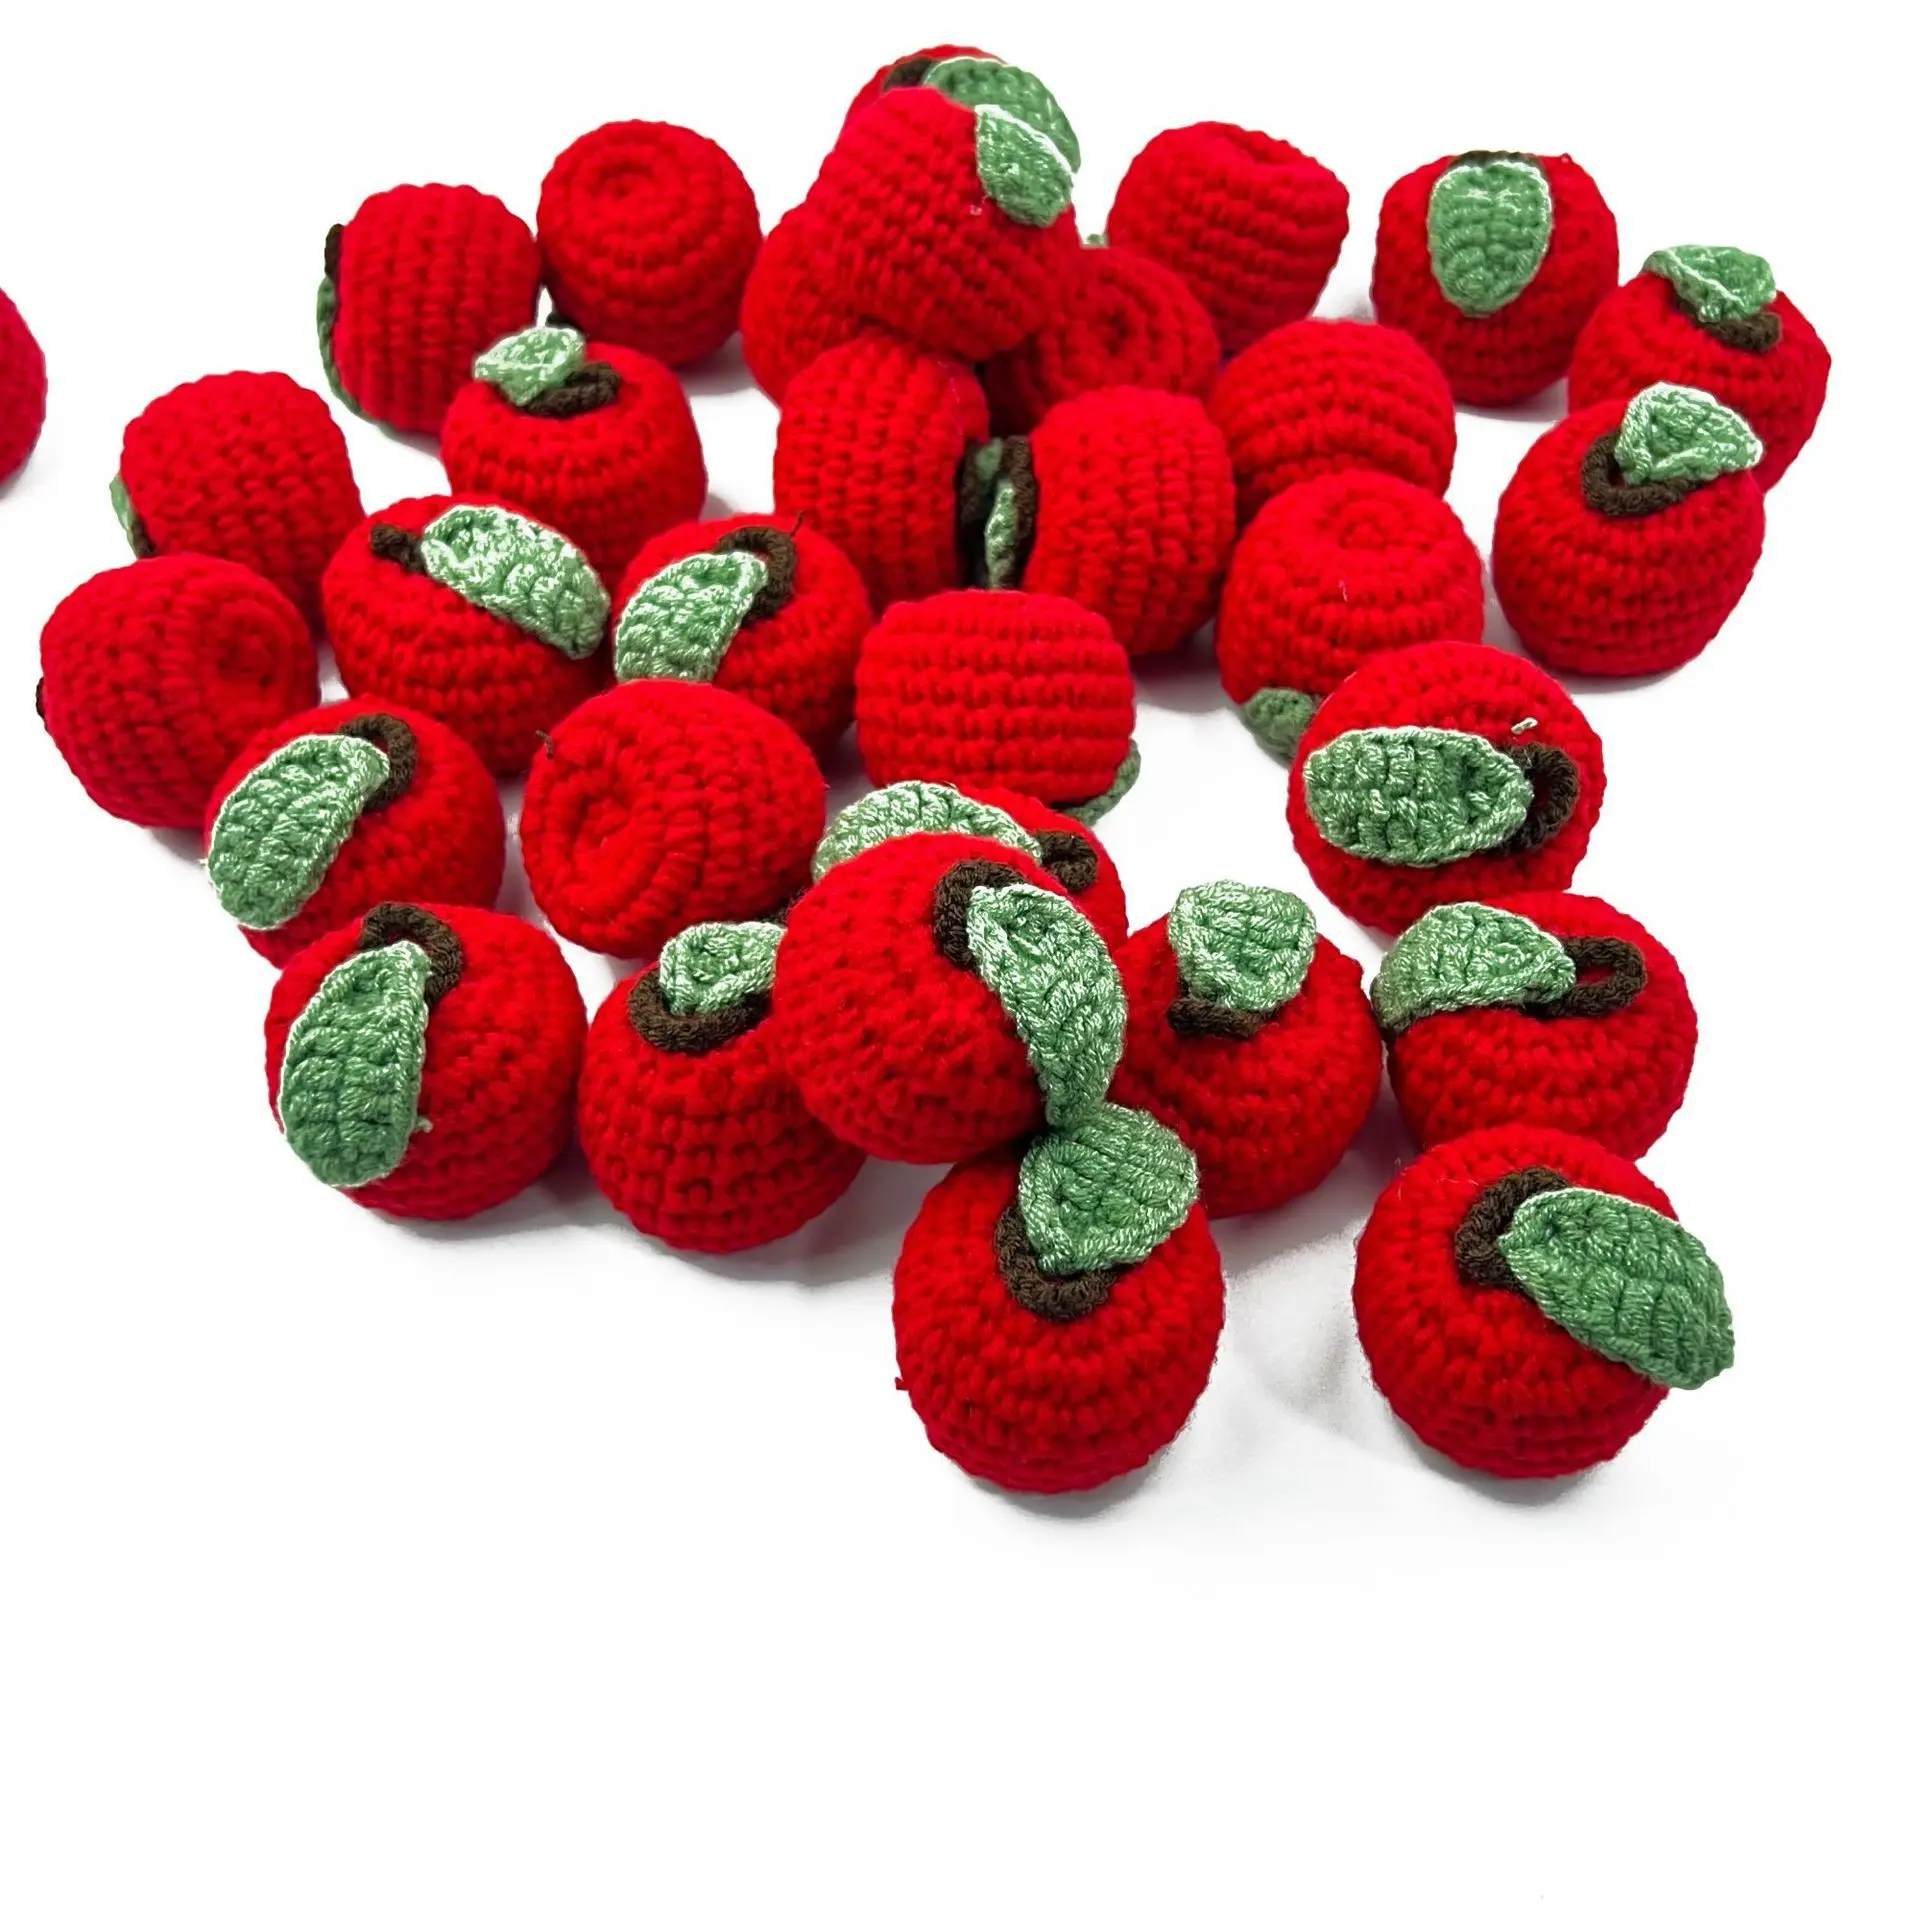 Spot gros articles de crochet faits à la main mignon dessin animé crochet fruit créatif crochet amigurumi